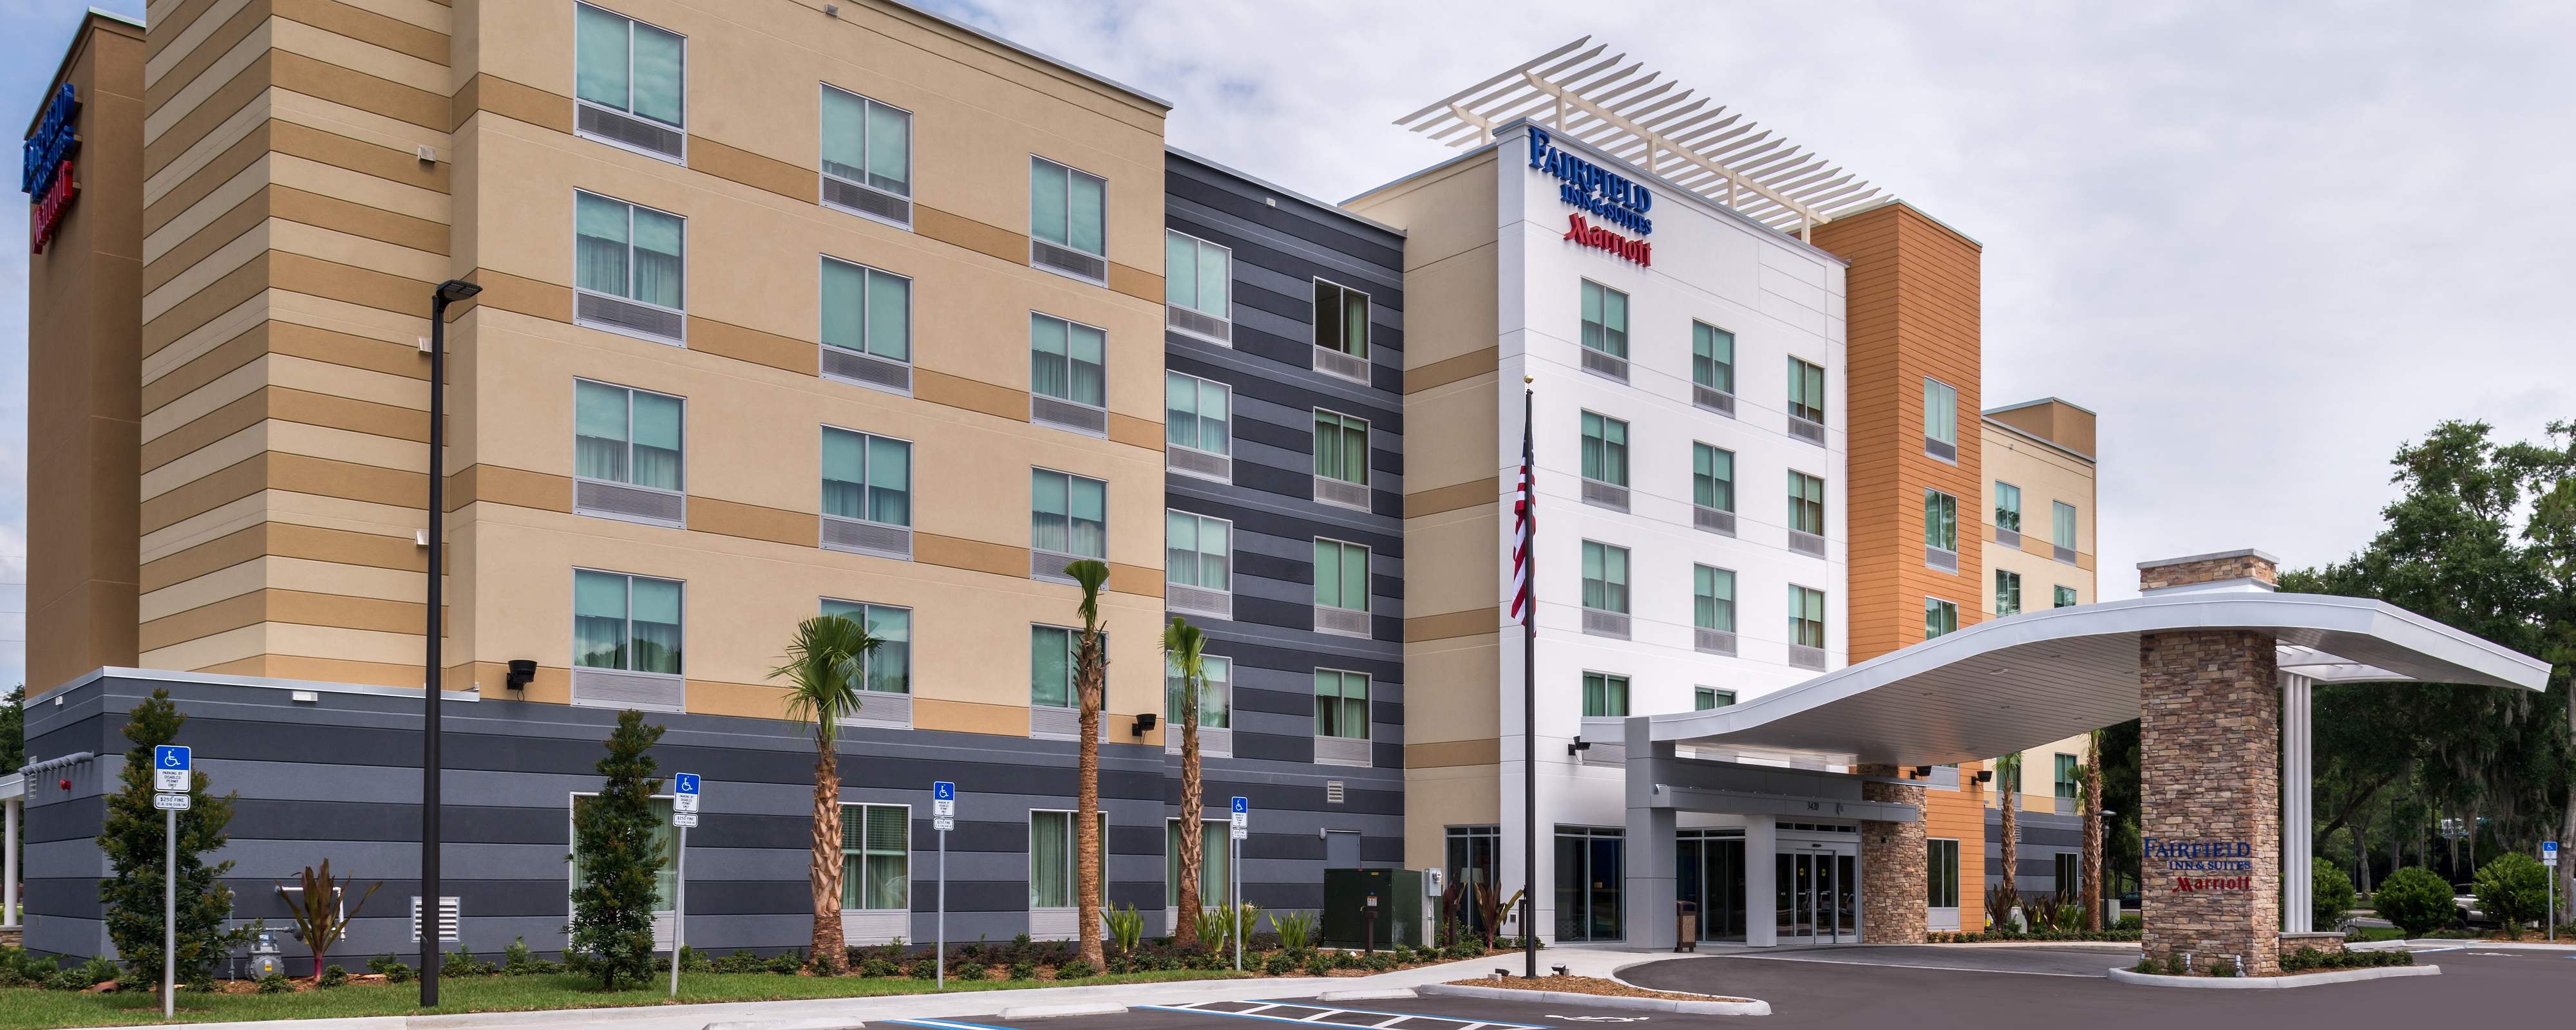 Ucf Hotels Fairfield Inn Suites Orlando East Ucf Area Hotel